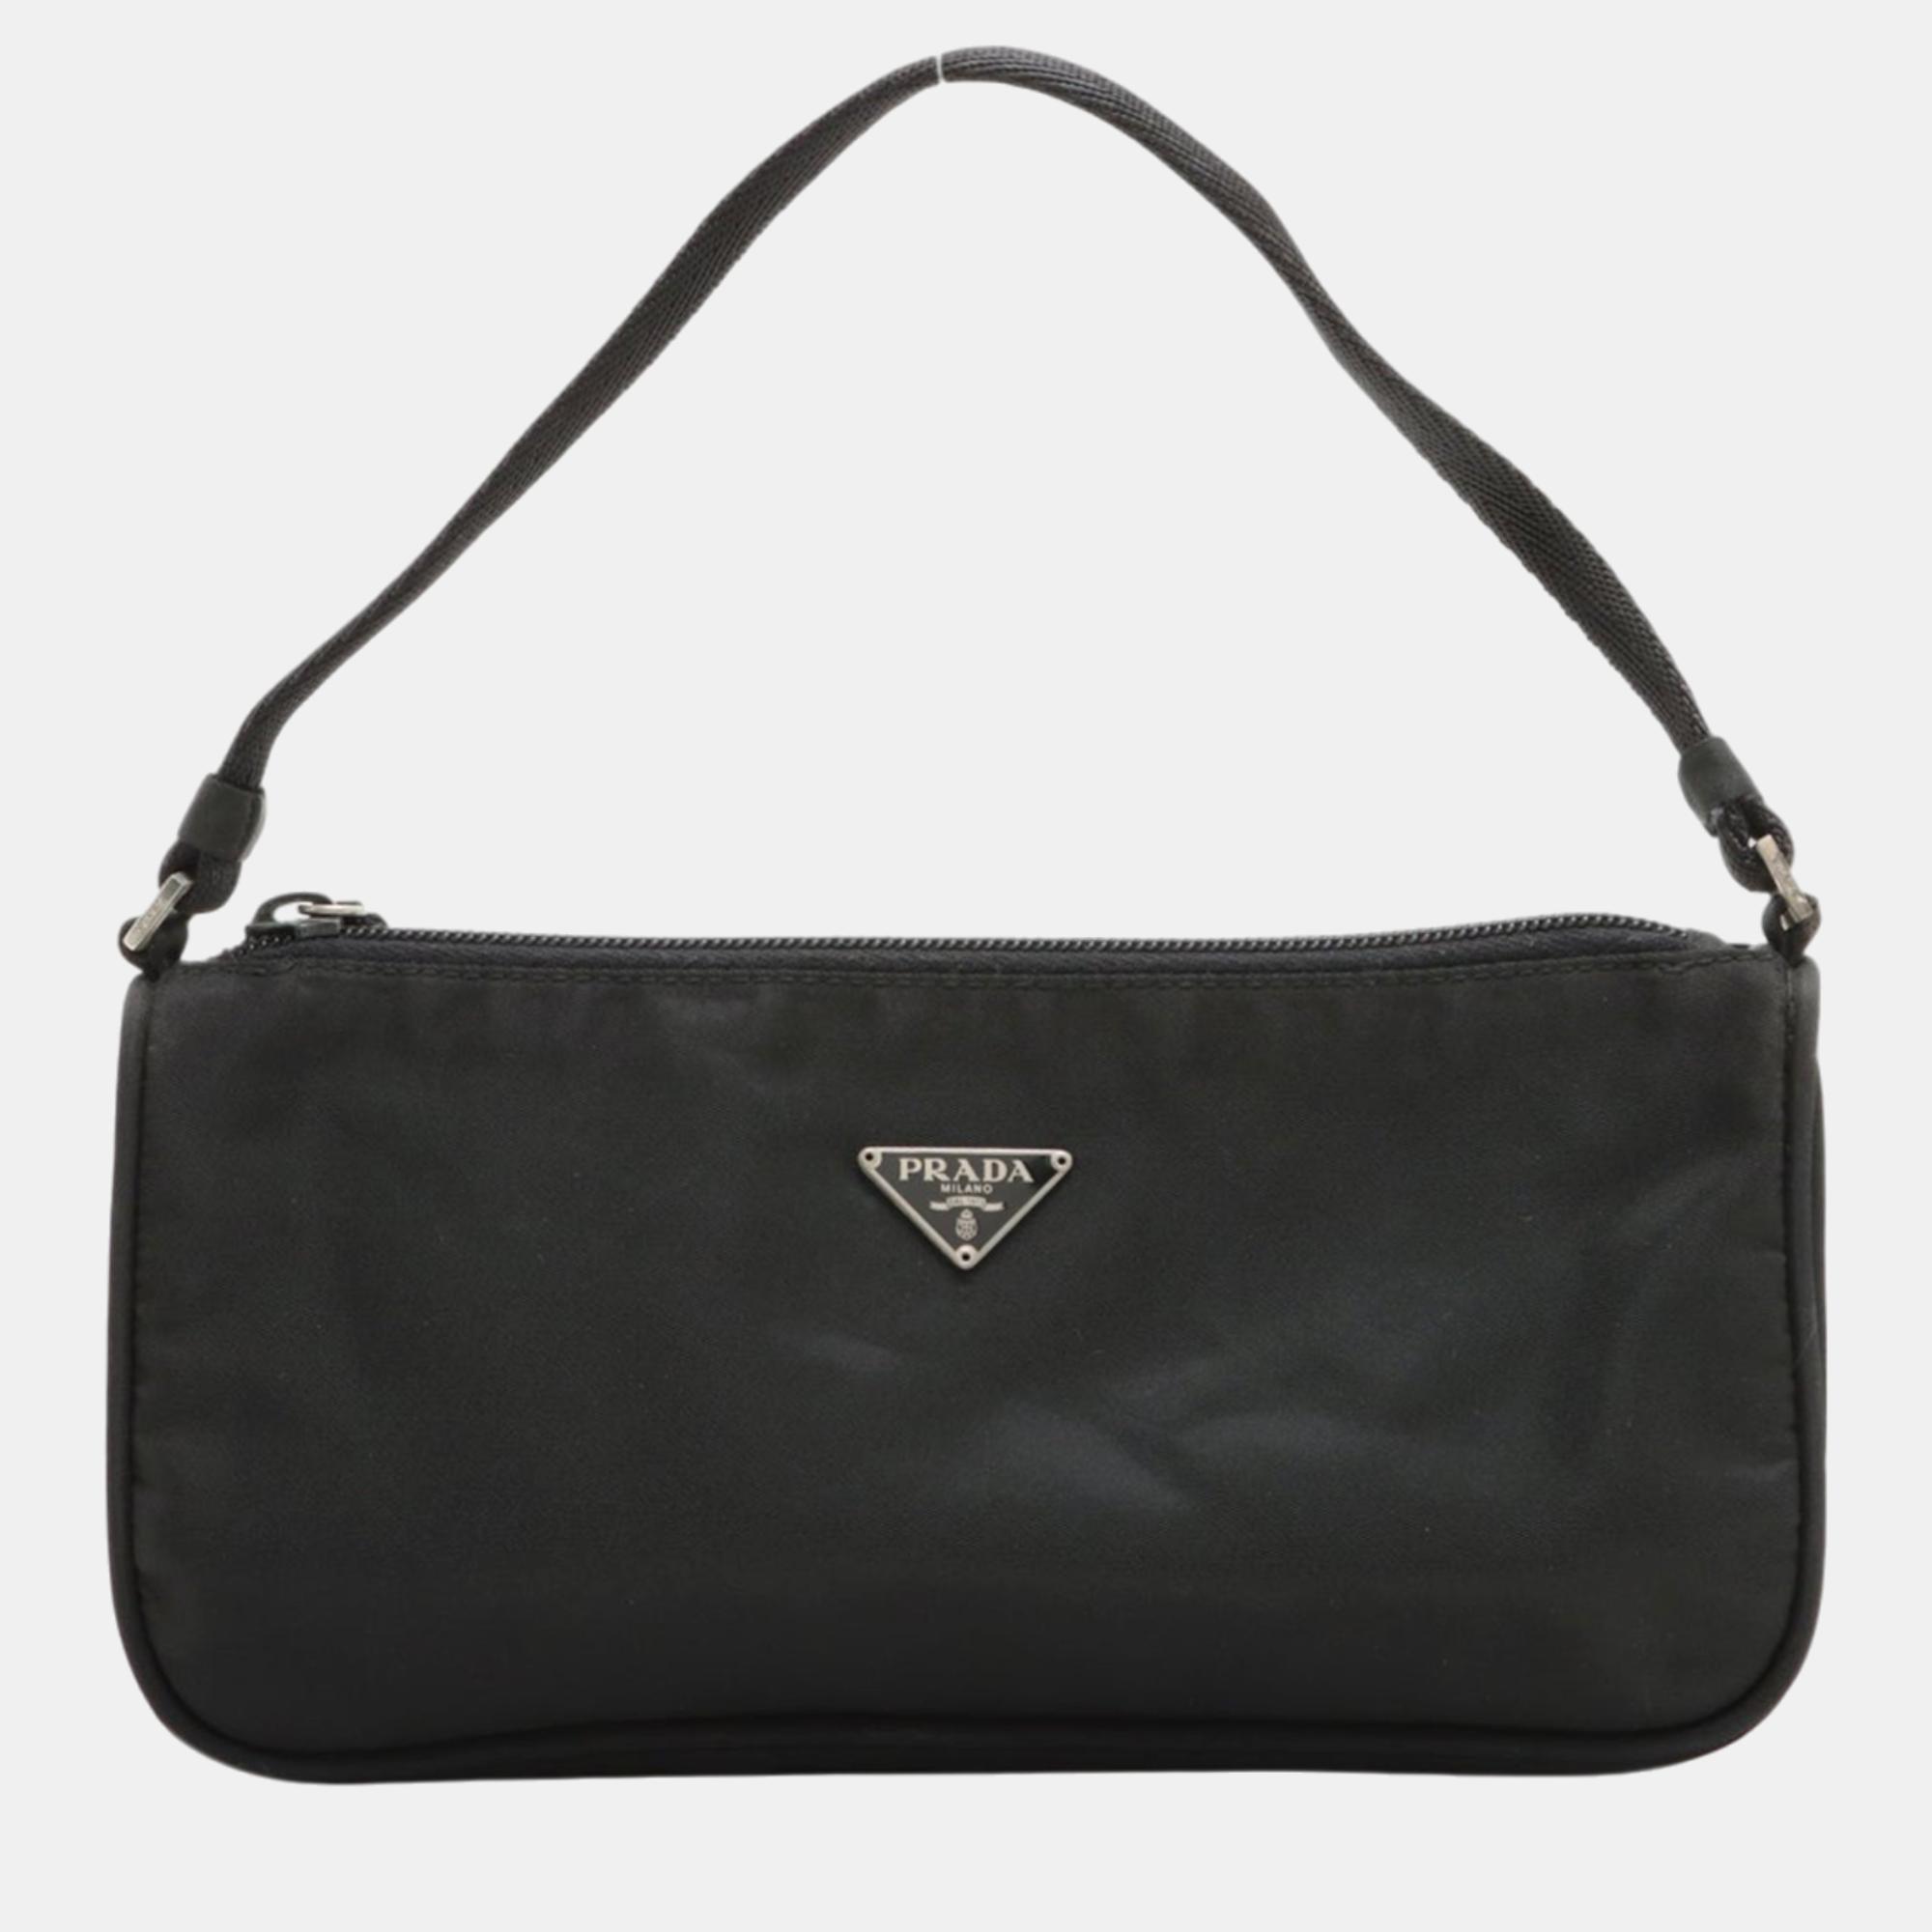 Prada black tessuto nylon handbag